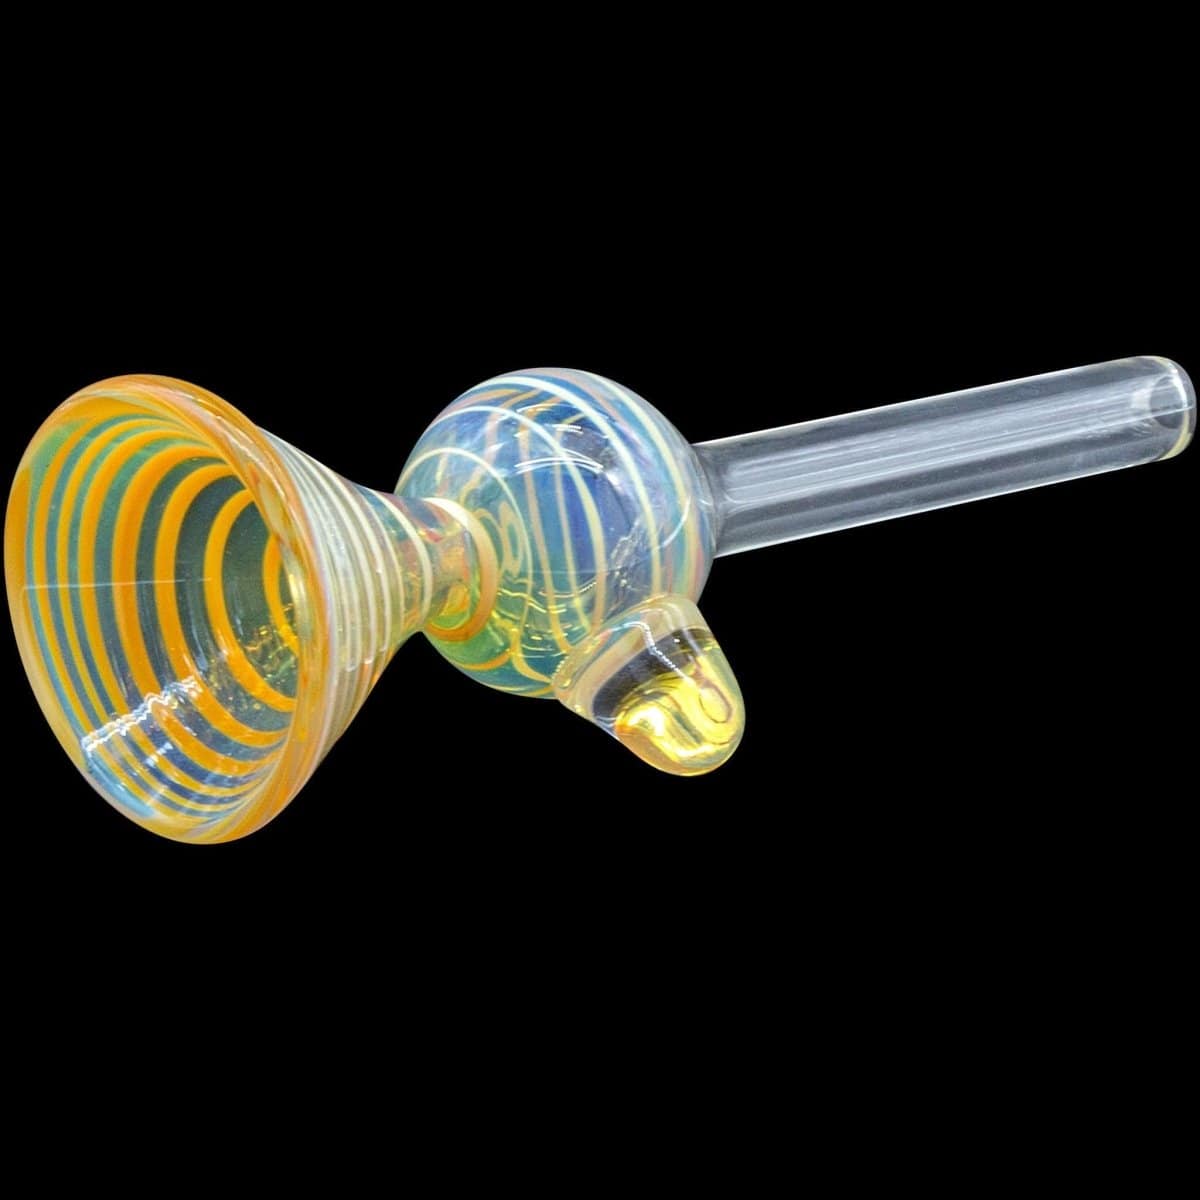 LA Pipes Smoking Accessory Amber "Loud Speaker" Pull-Stem Slide Bowl